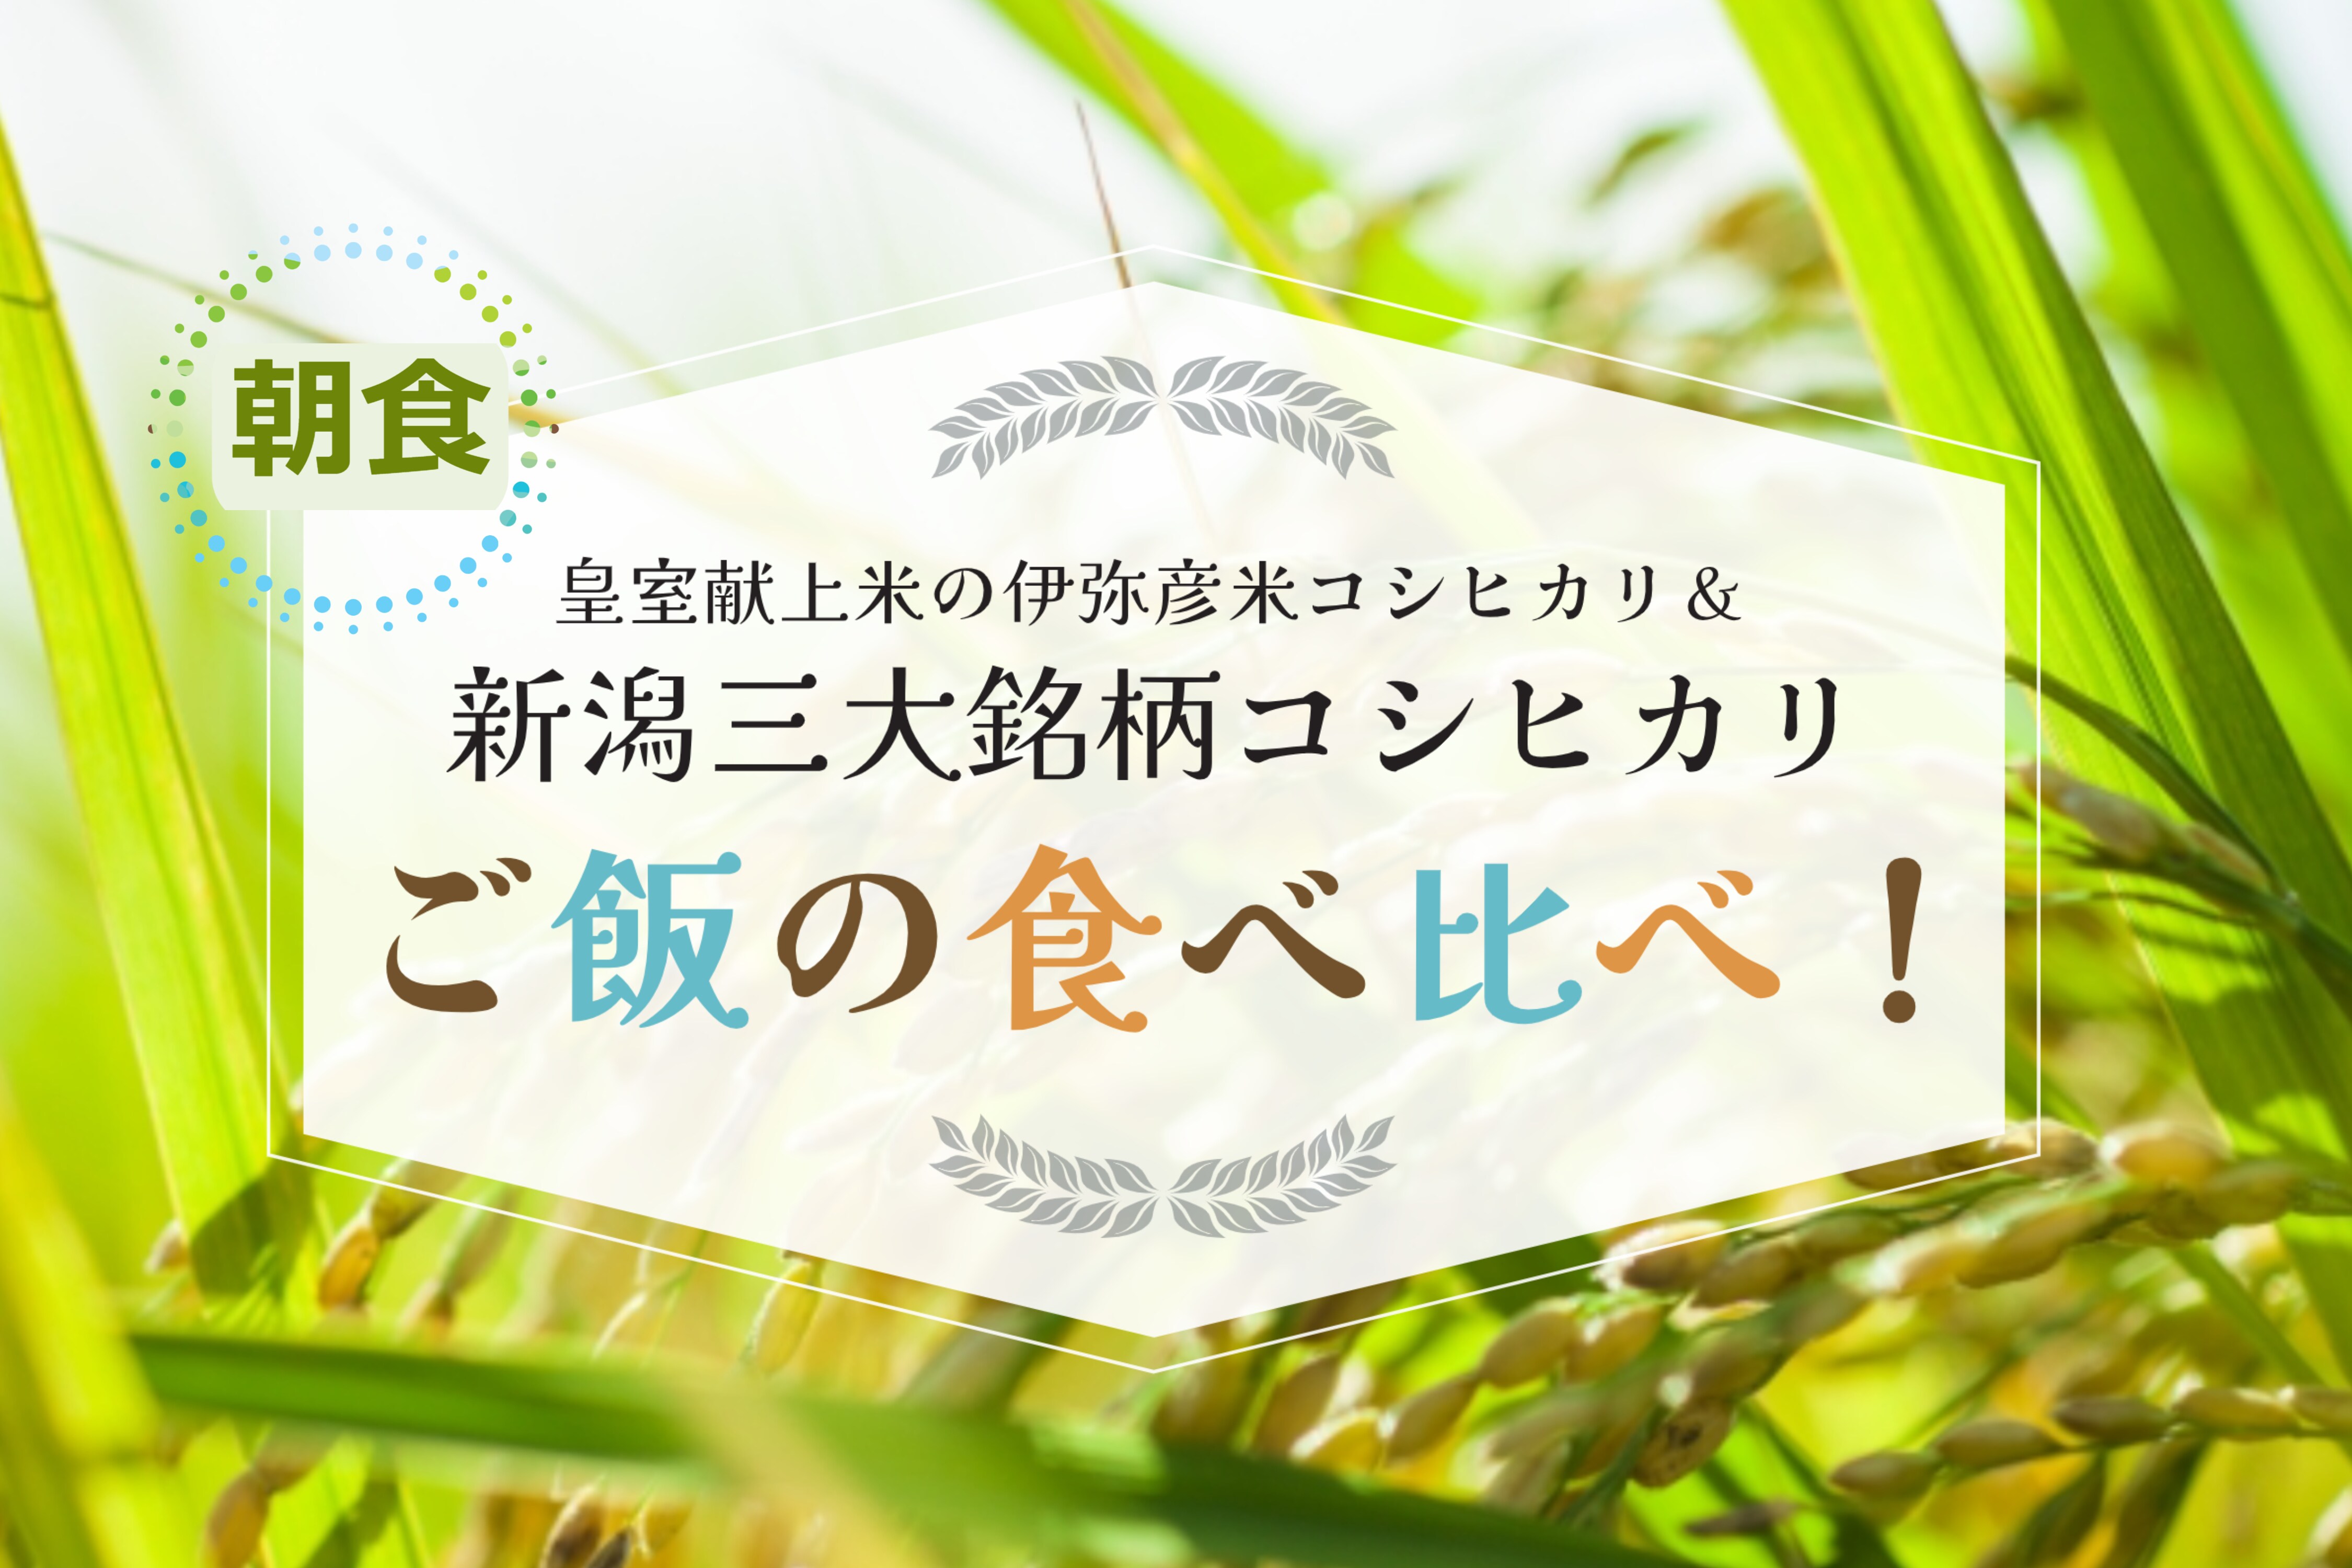 Taste and compare three types of rice, including Imayahiko rice, which was presented to the imperial family, and Niigata's three major brands (Uonuma, Sado, Iwafune) and Koshihikari♪